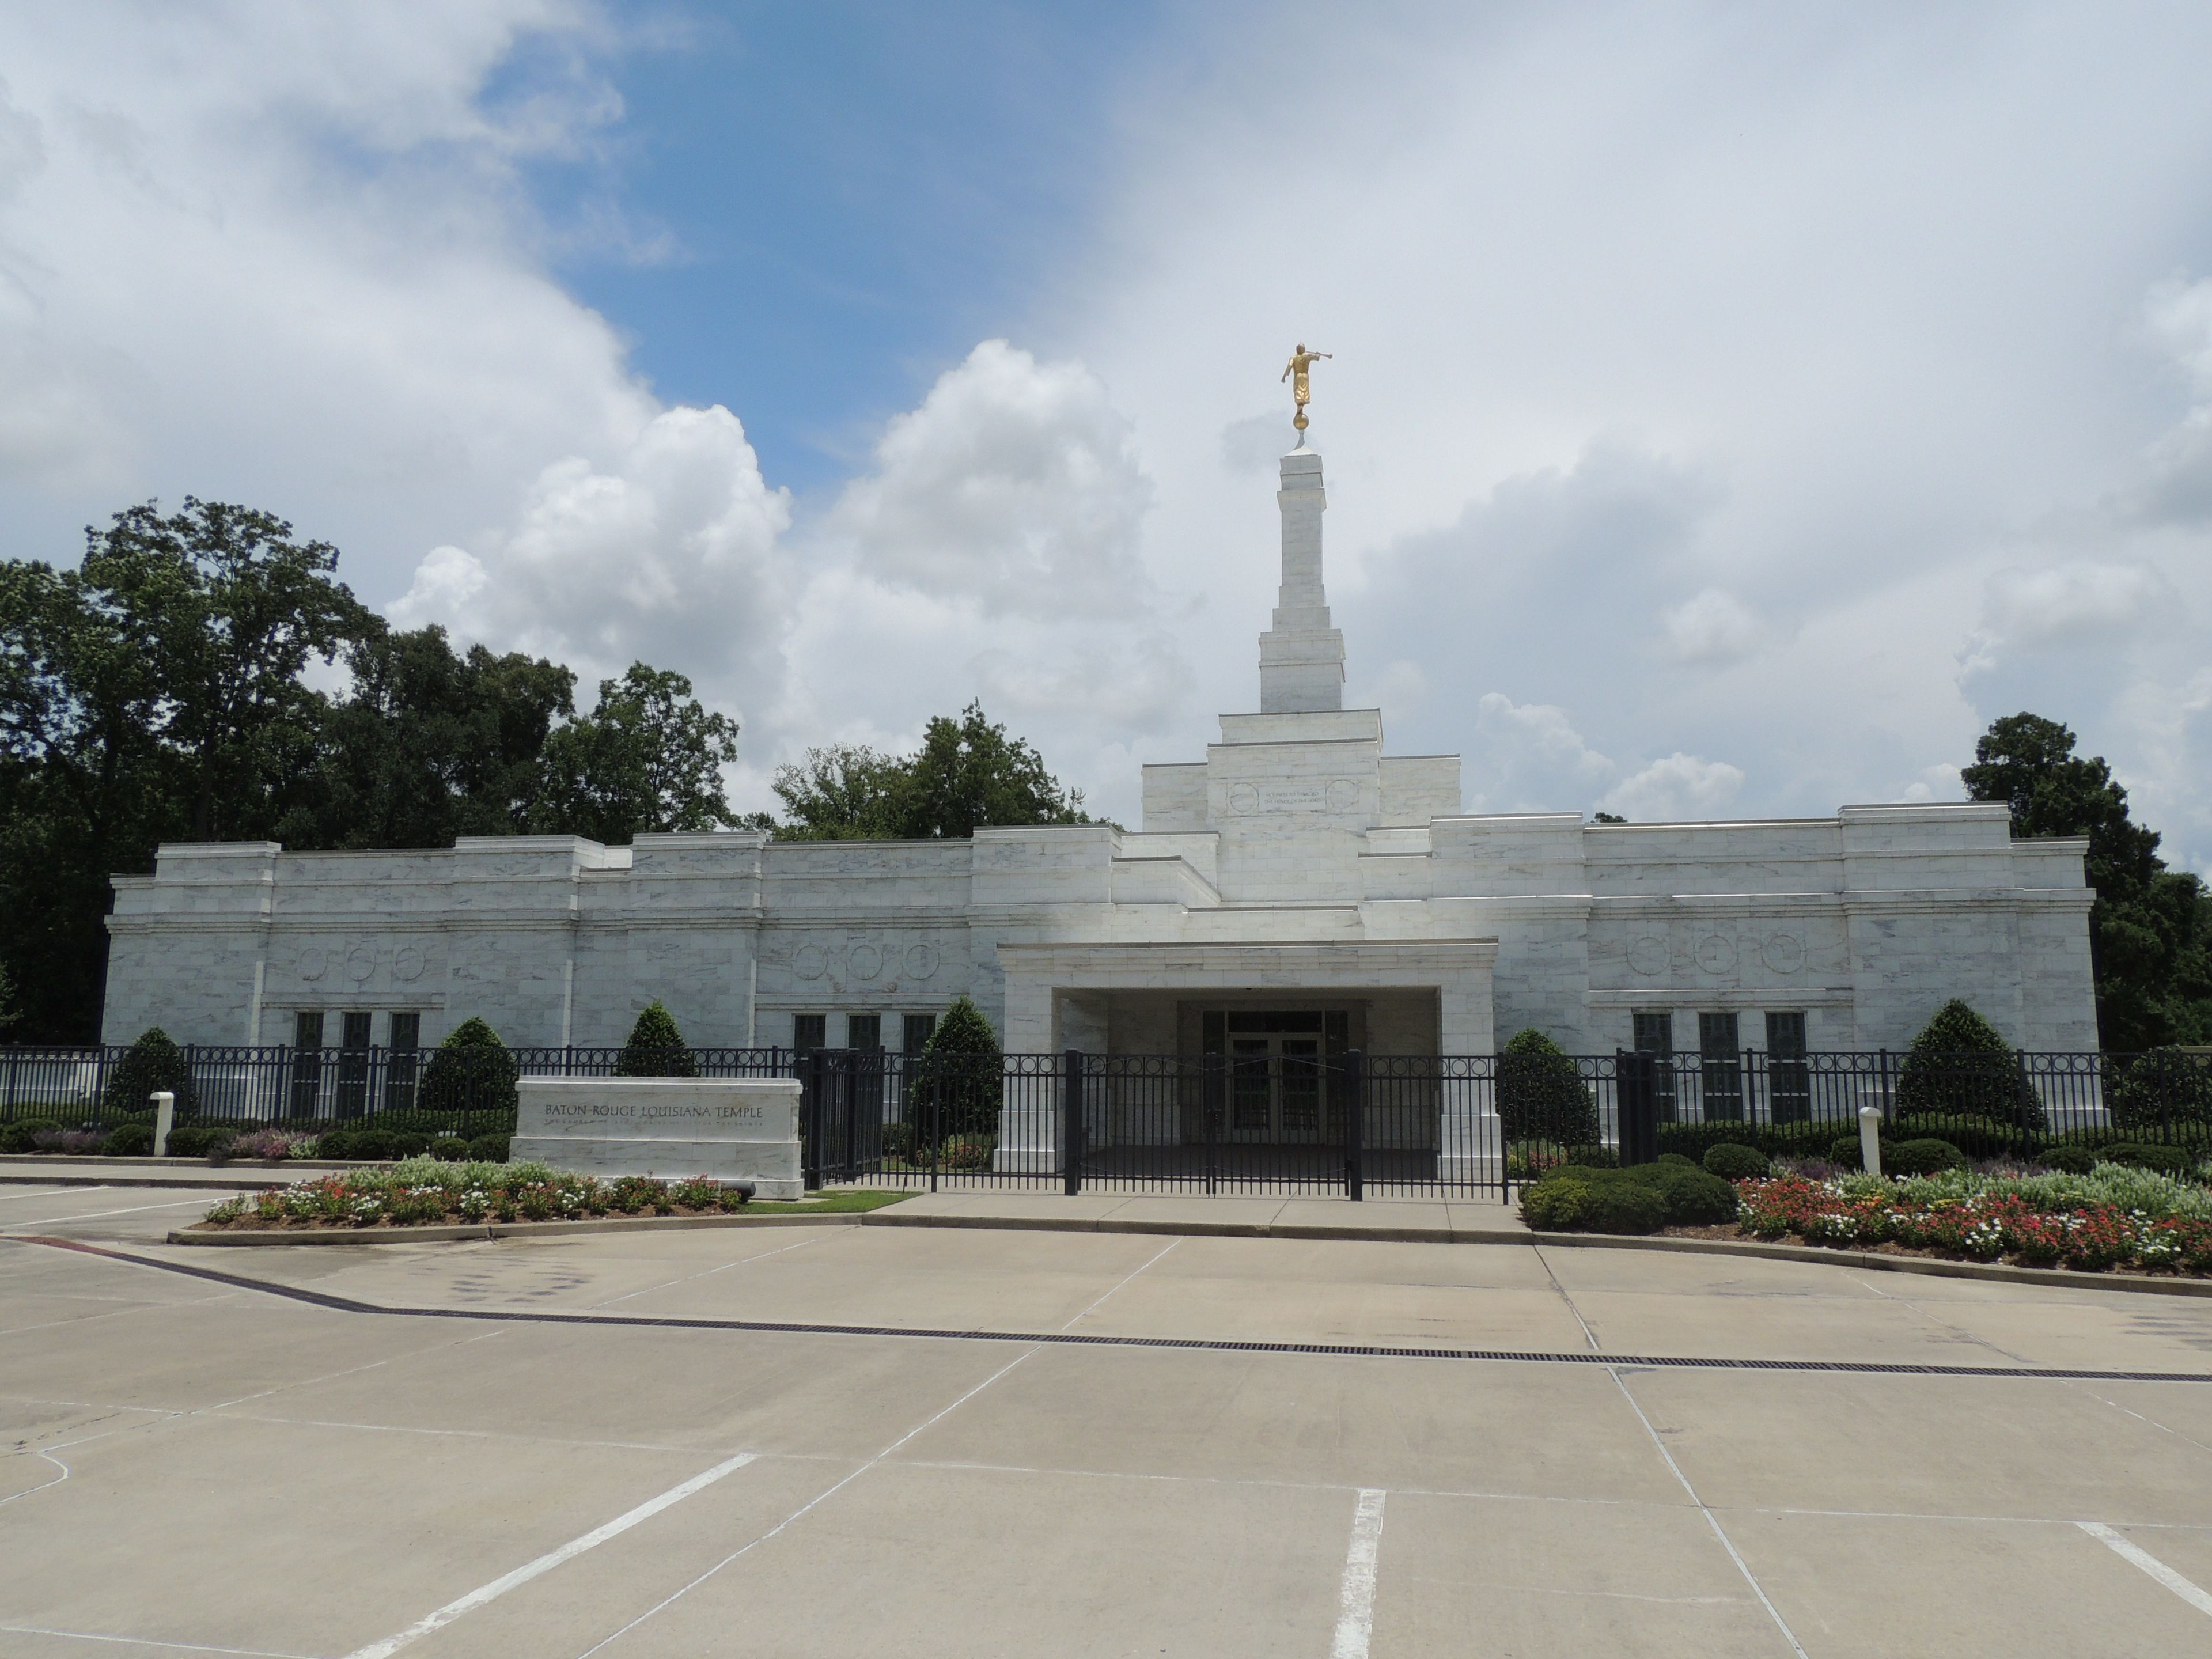 The main entrance to the Baton Rouge Louisiana Temple.